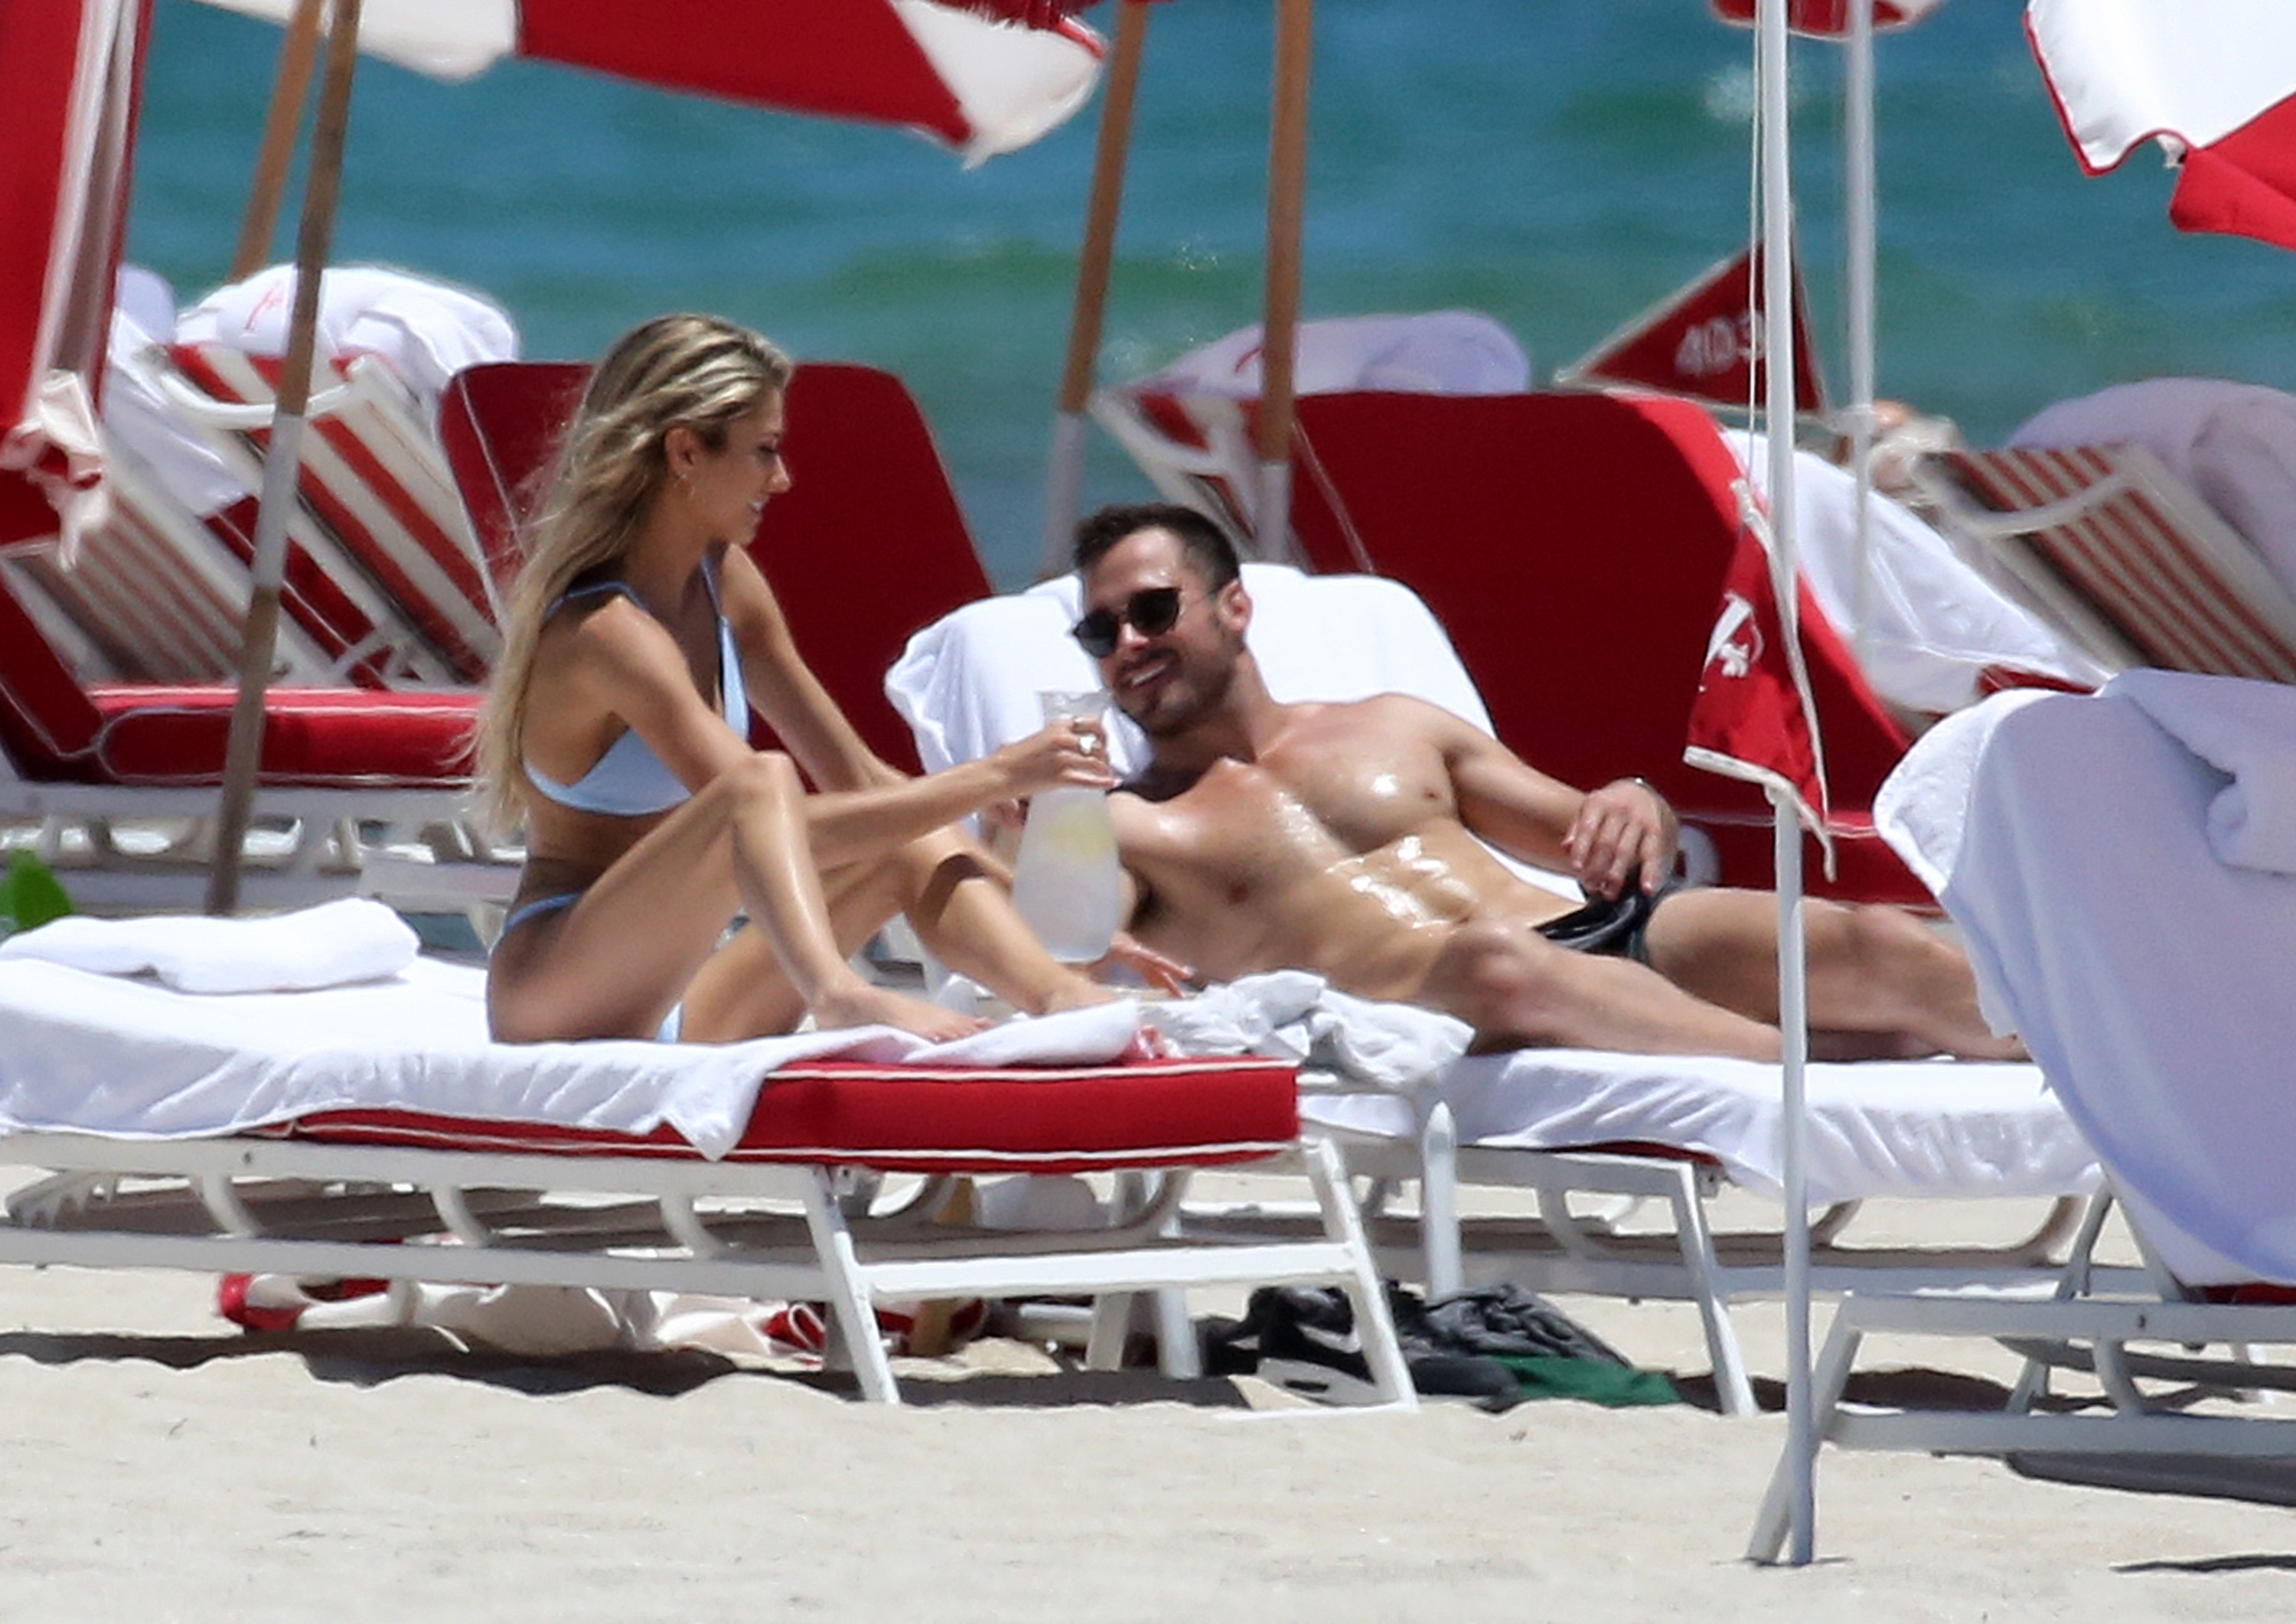 Olivia Culpo's Ex Danny Amendola Hits the Beach With a Mystery Girl